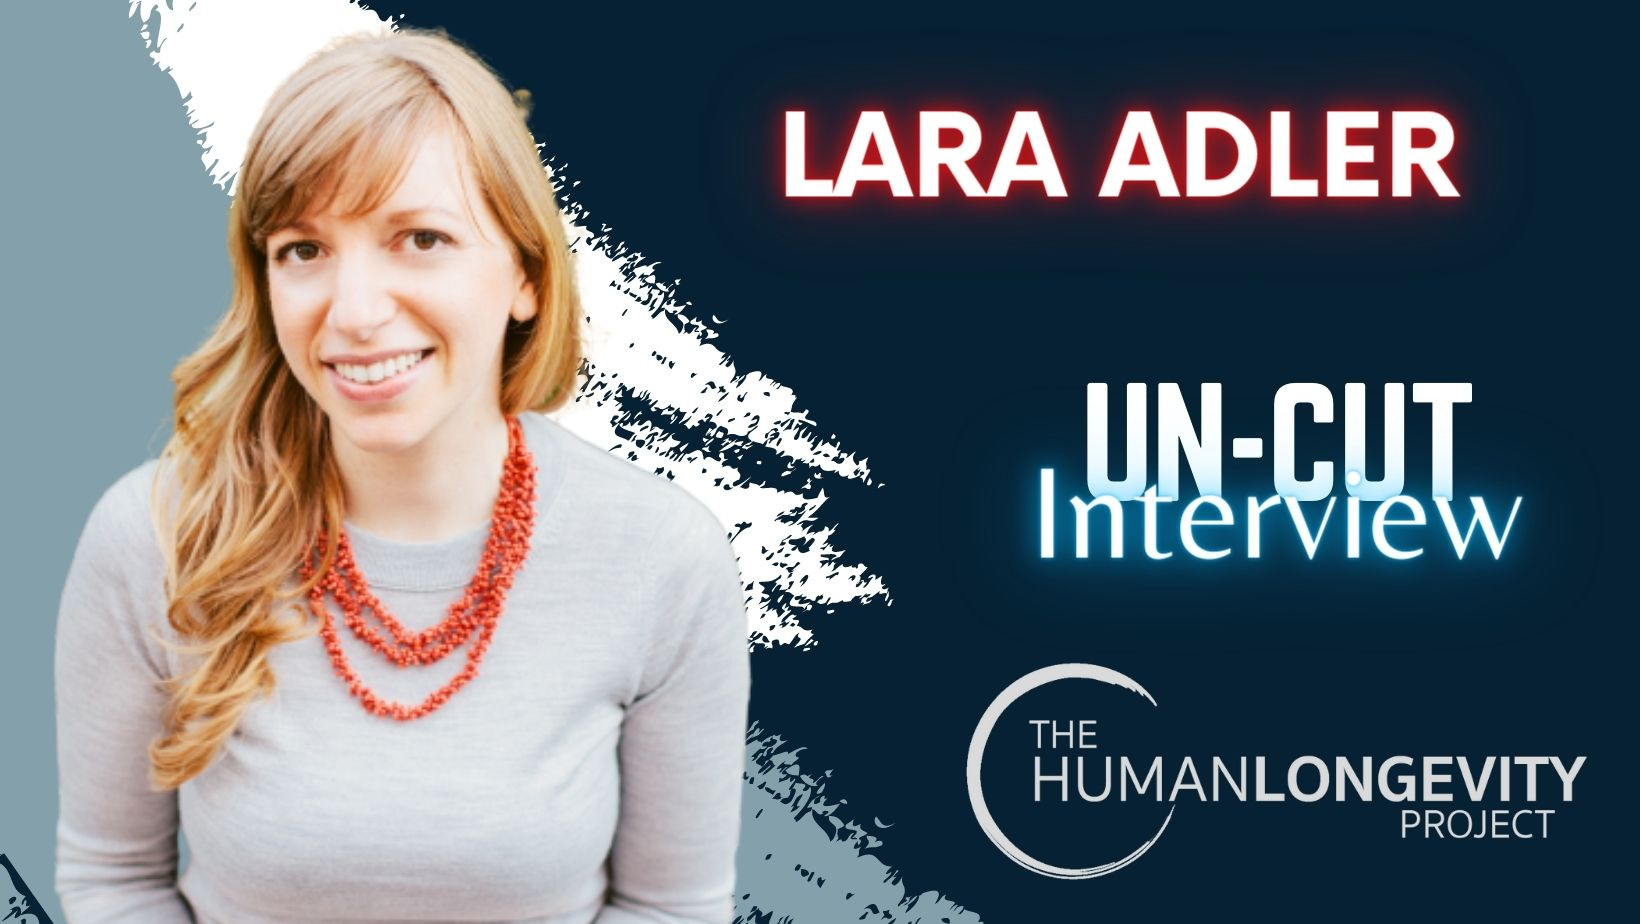 Human Longevity Project Uncut Interview With Lara Adler